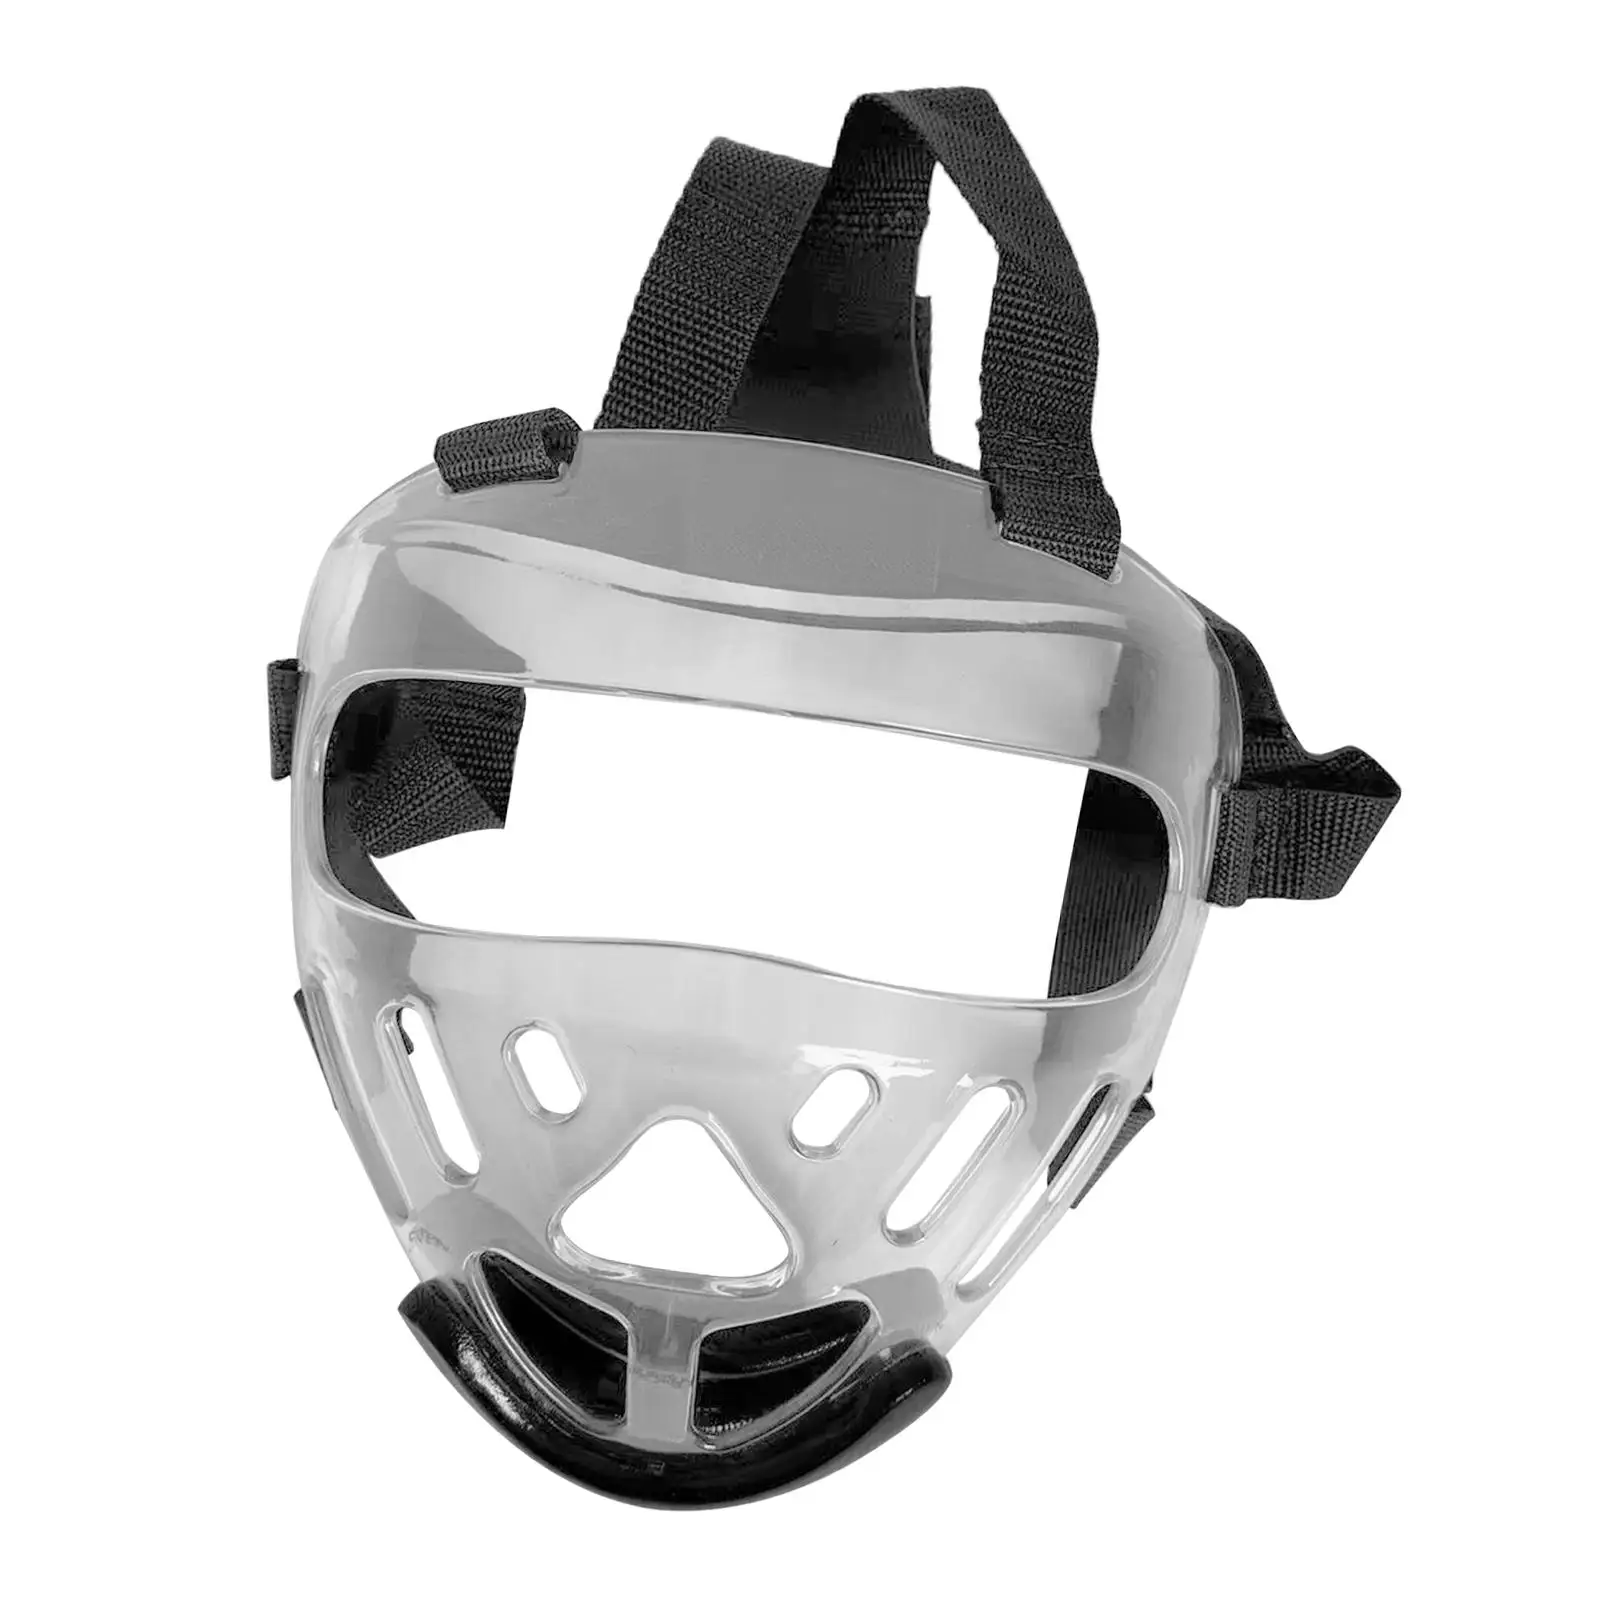 Taekwondo Face Mask Kids Taekwondo Face Shield Boxing Headgear Mask Detachable Face Guard Head Cover for Boxing Sanda Sparring